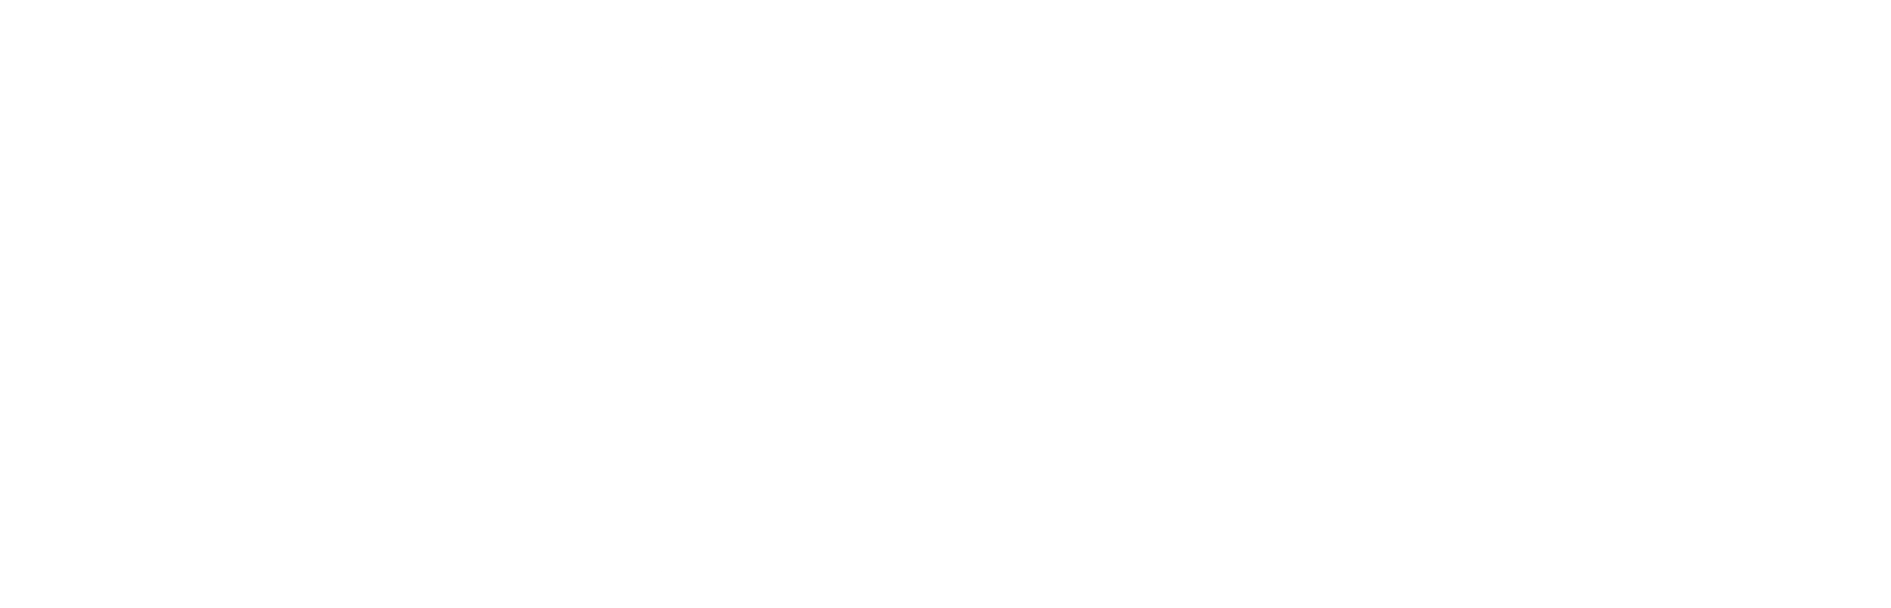 Florida's Premier Insurance Agency – A King Insurance Partner